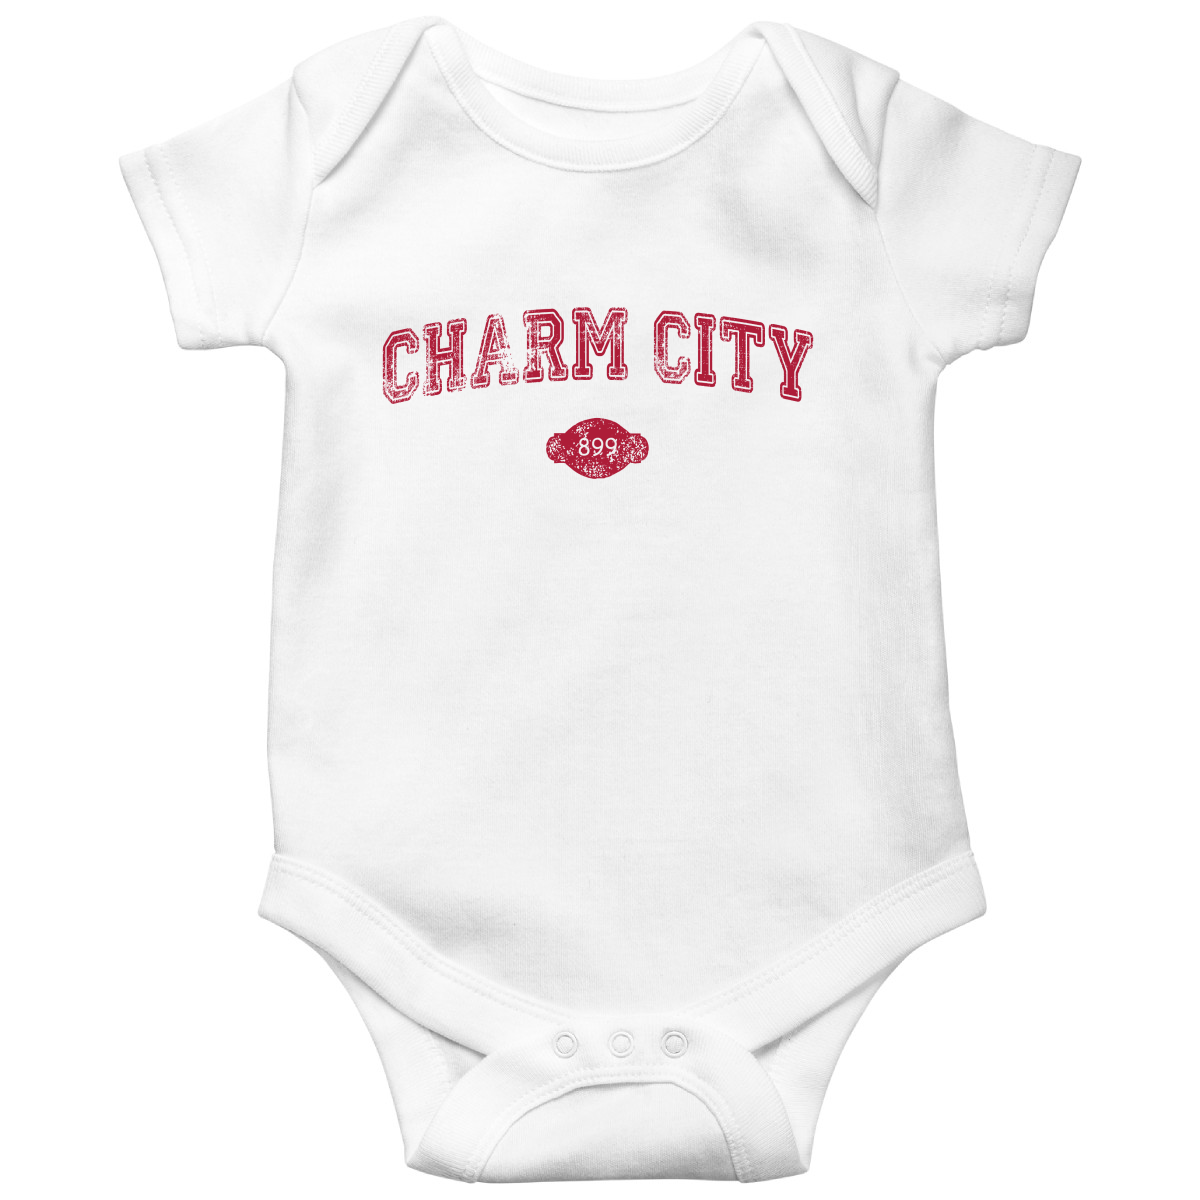 Charm City 1729 Represent Baby Bodysuits